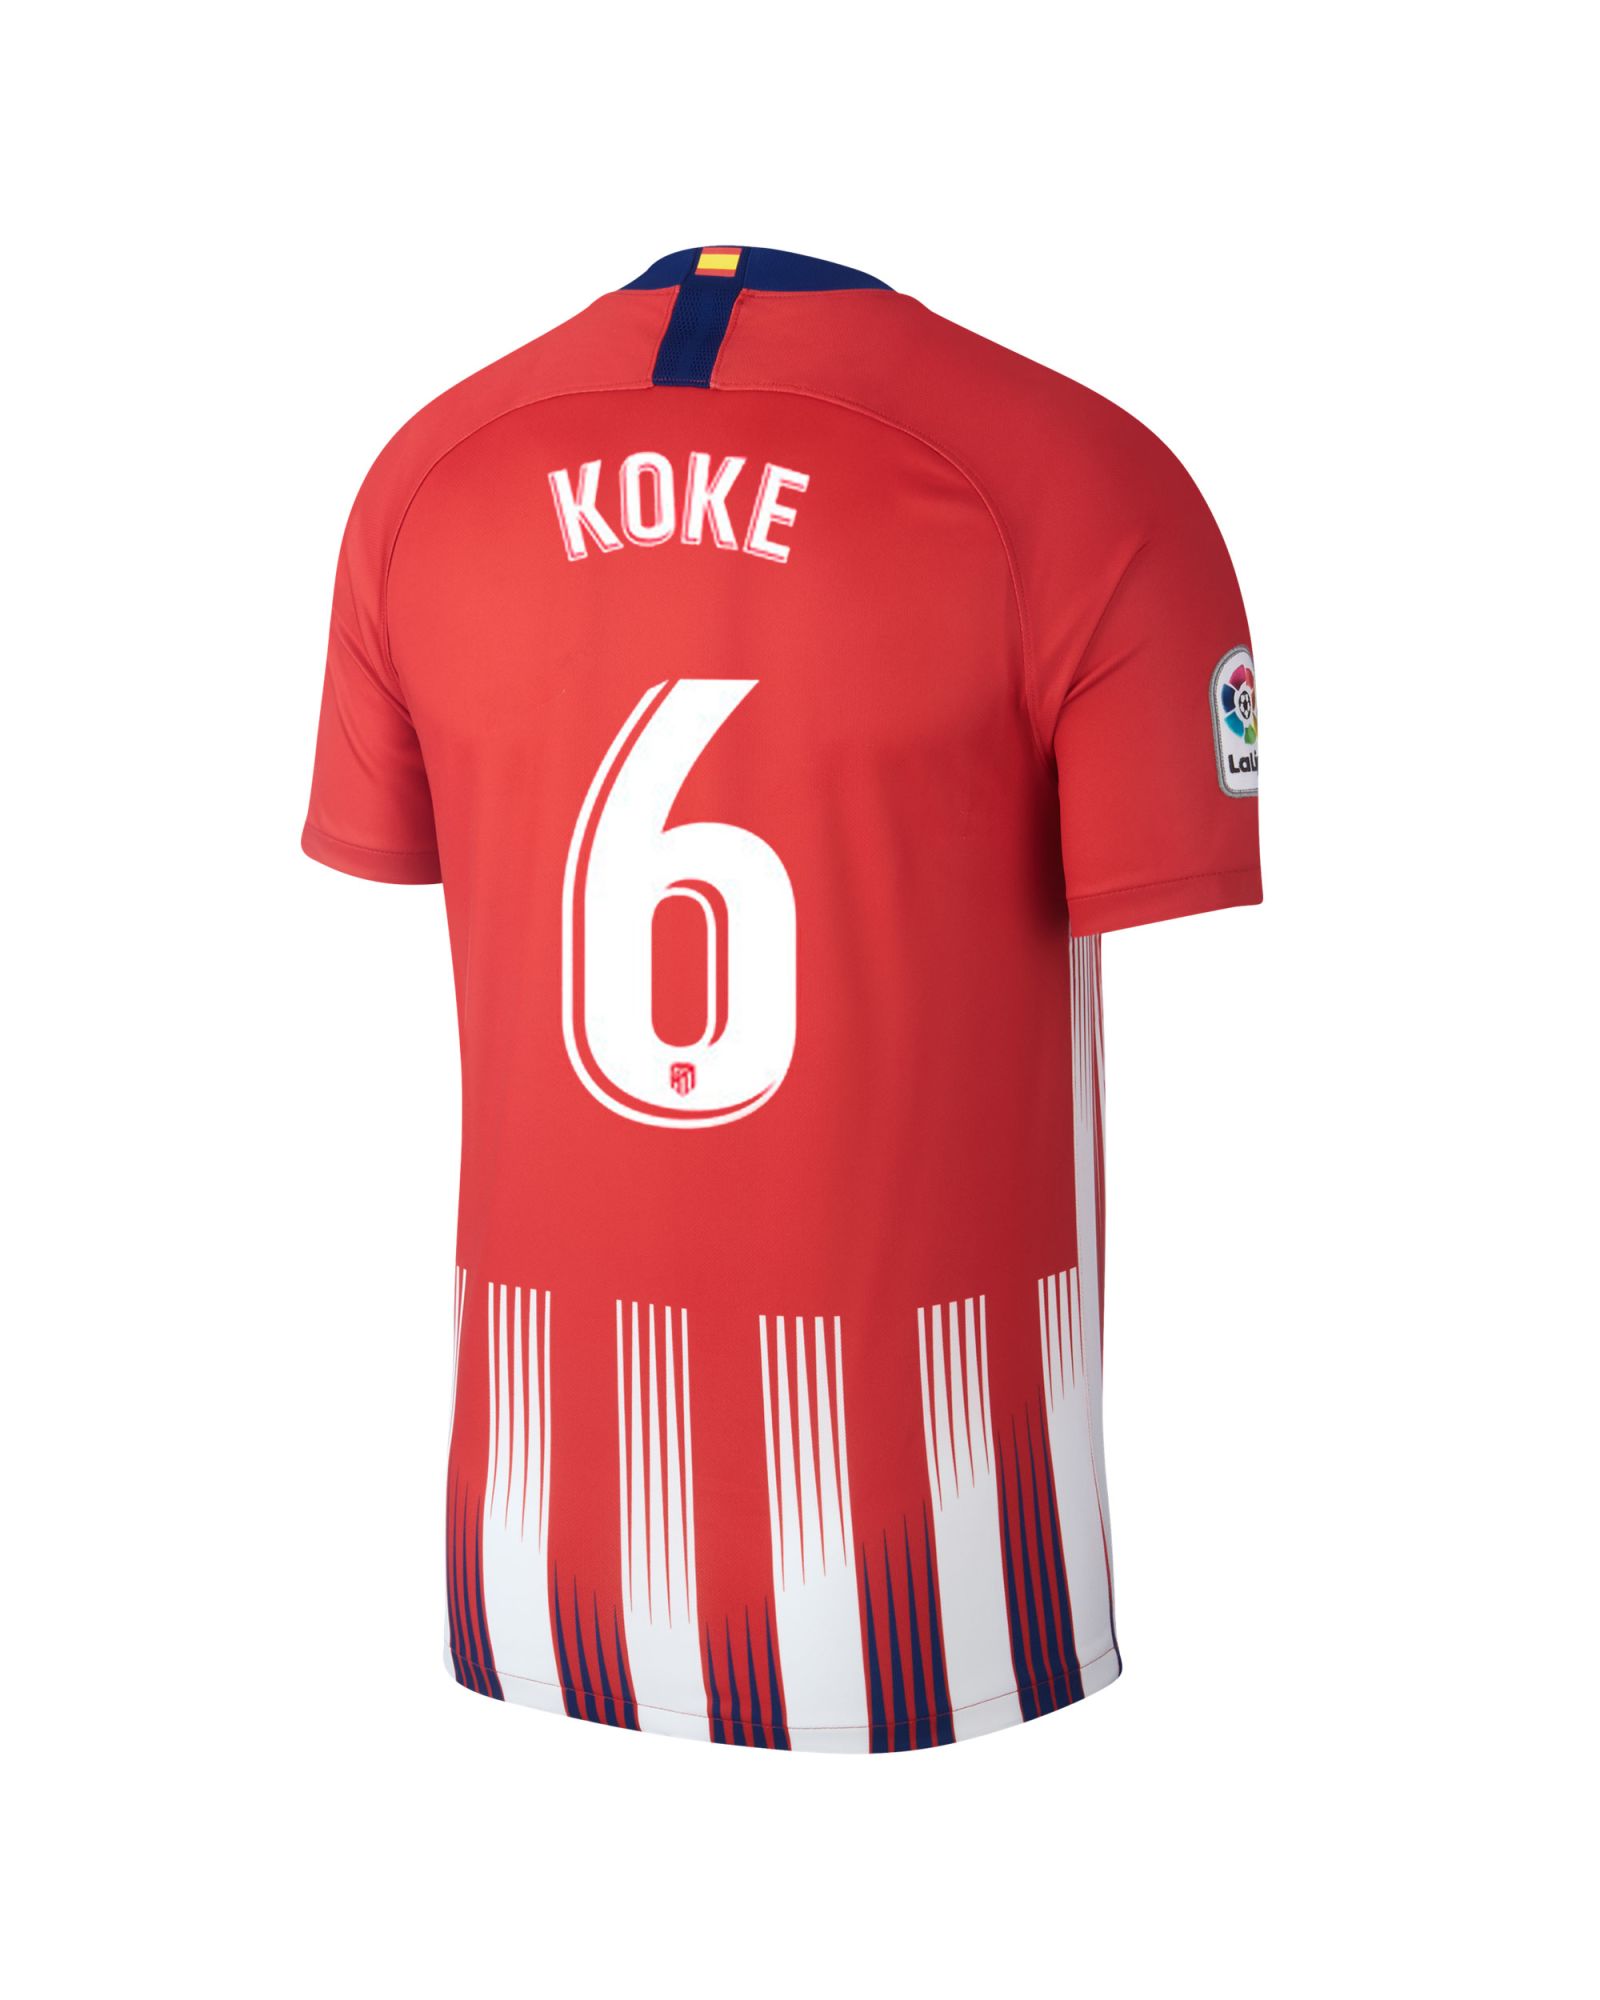 Camiseta 1ª Atlético de Madrid 2018/2019 Stadium Koke - Fútbol Factory